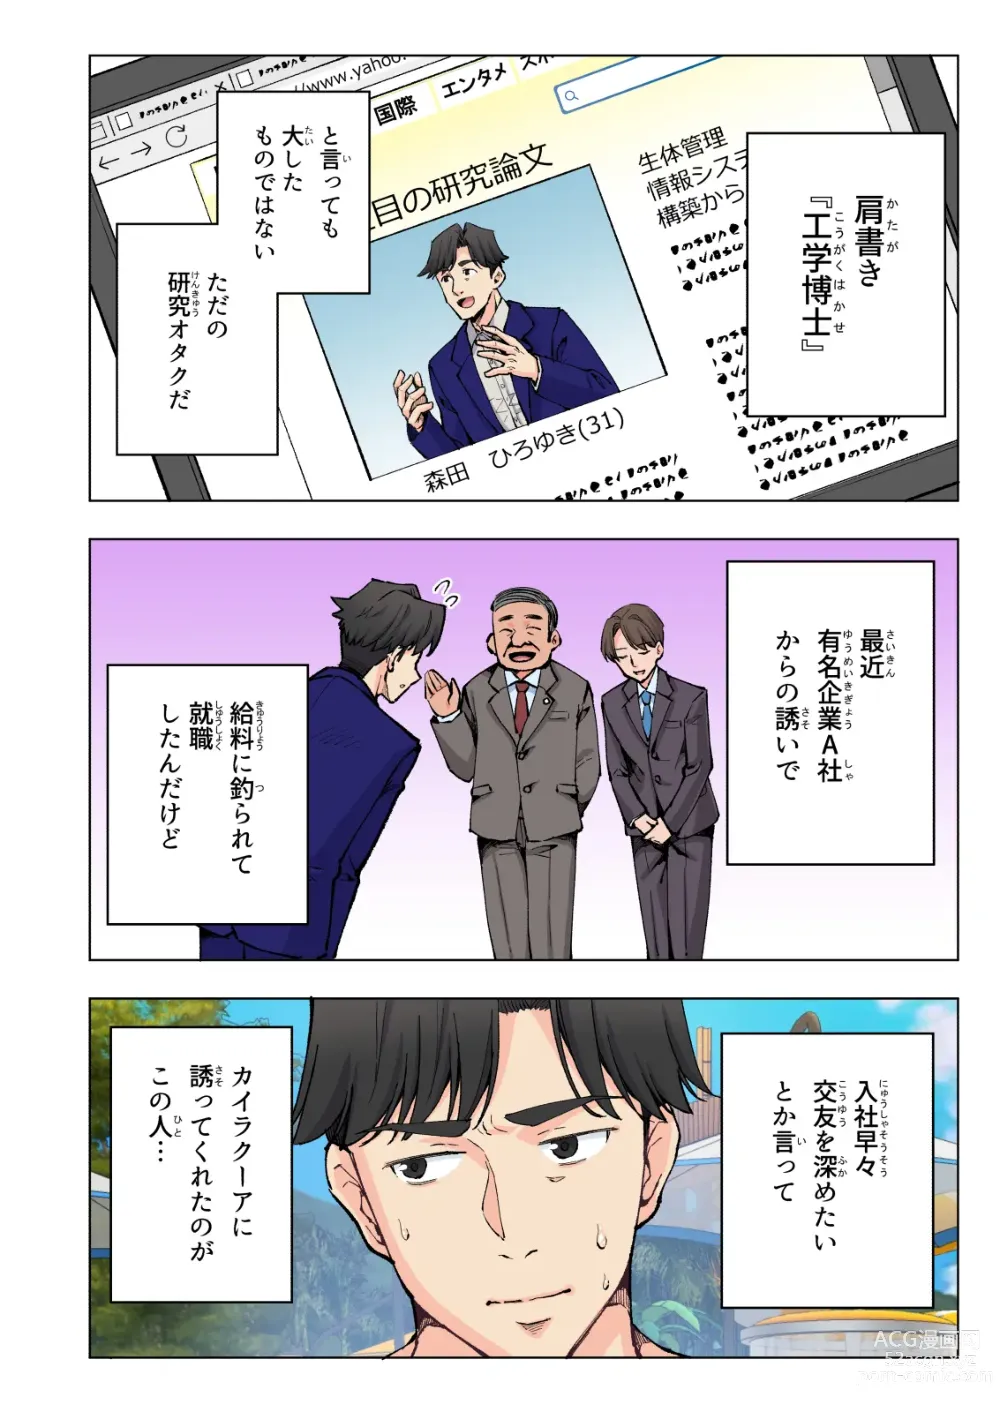 Page 9 of doujinshi スパ・カイラクーア